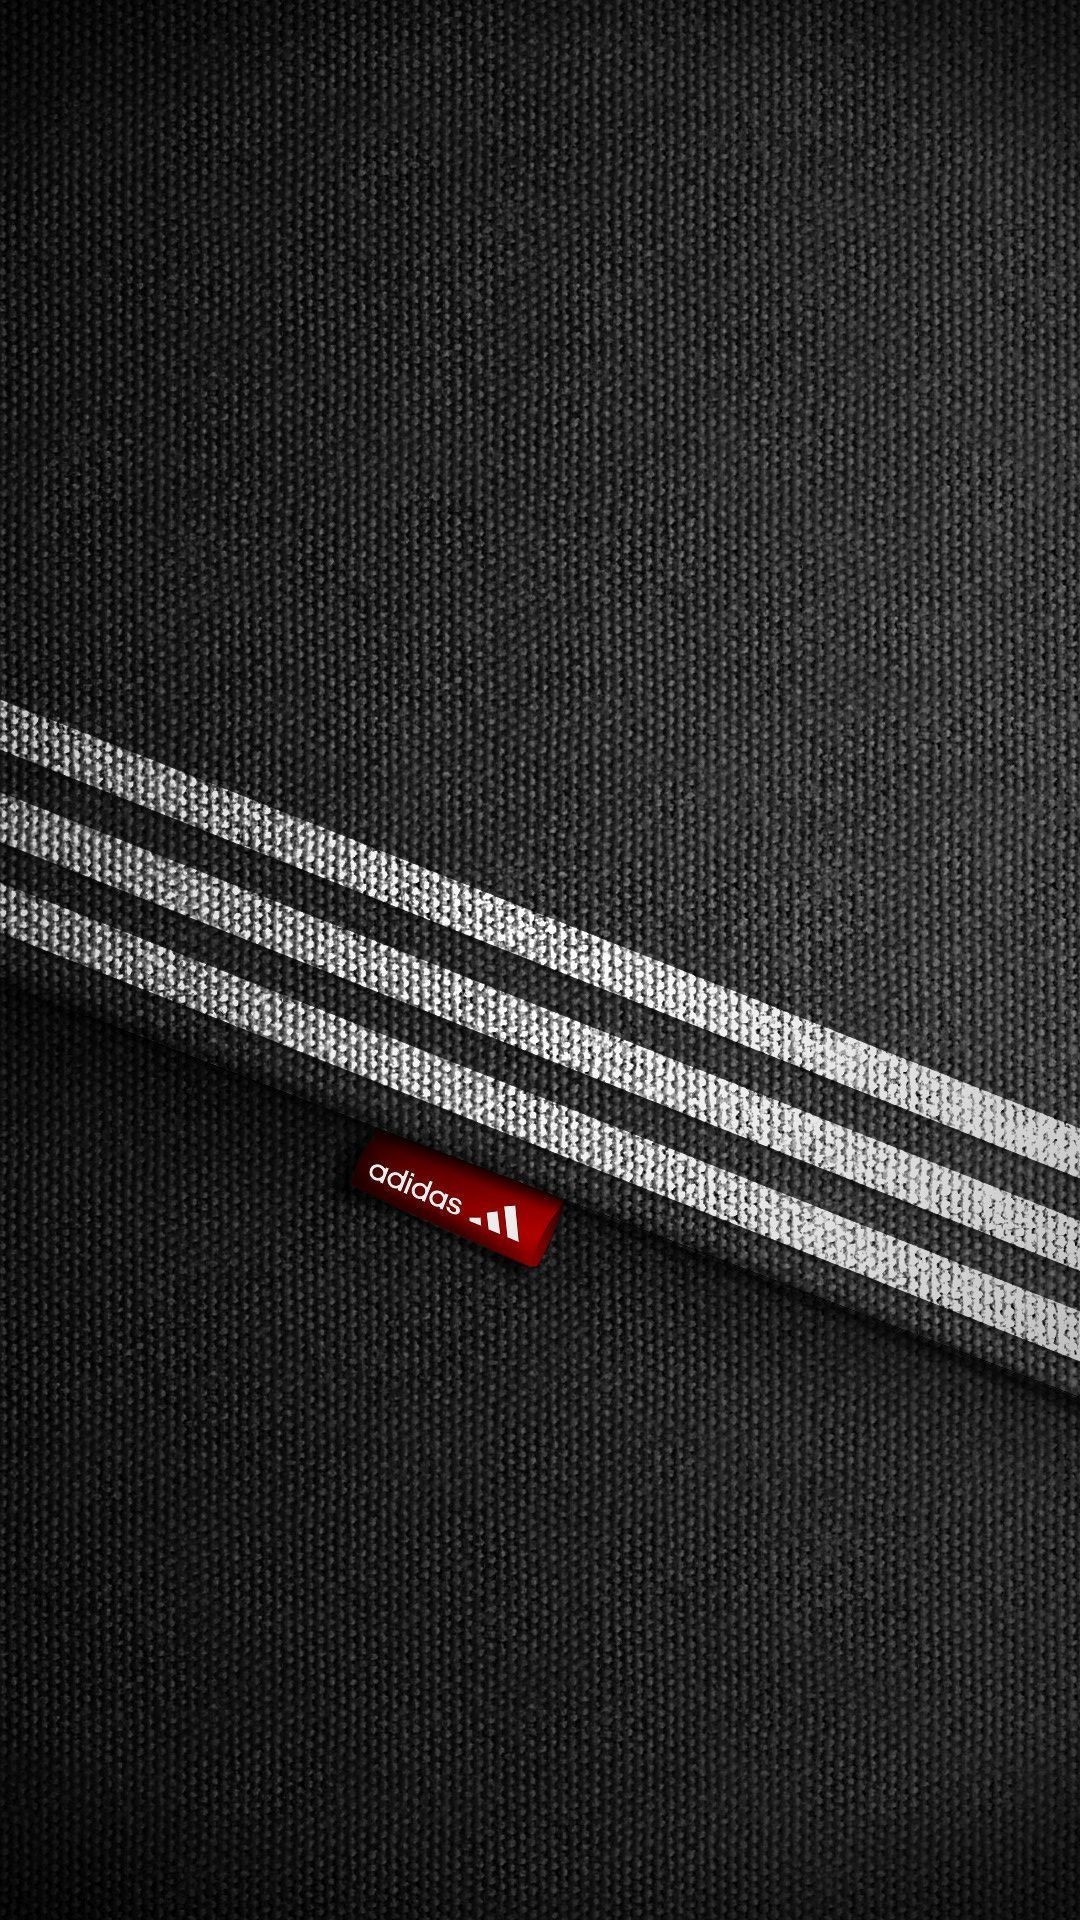 Adidas Iphone X Wallpaper Off 65 Www Otuzaltinciparalel Com